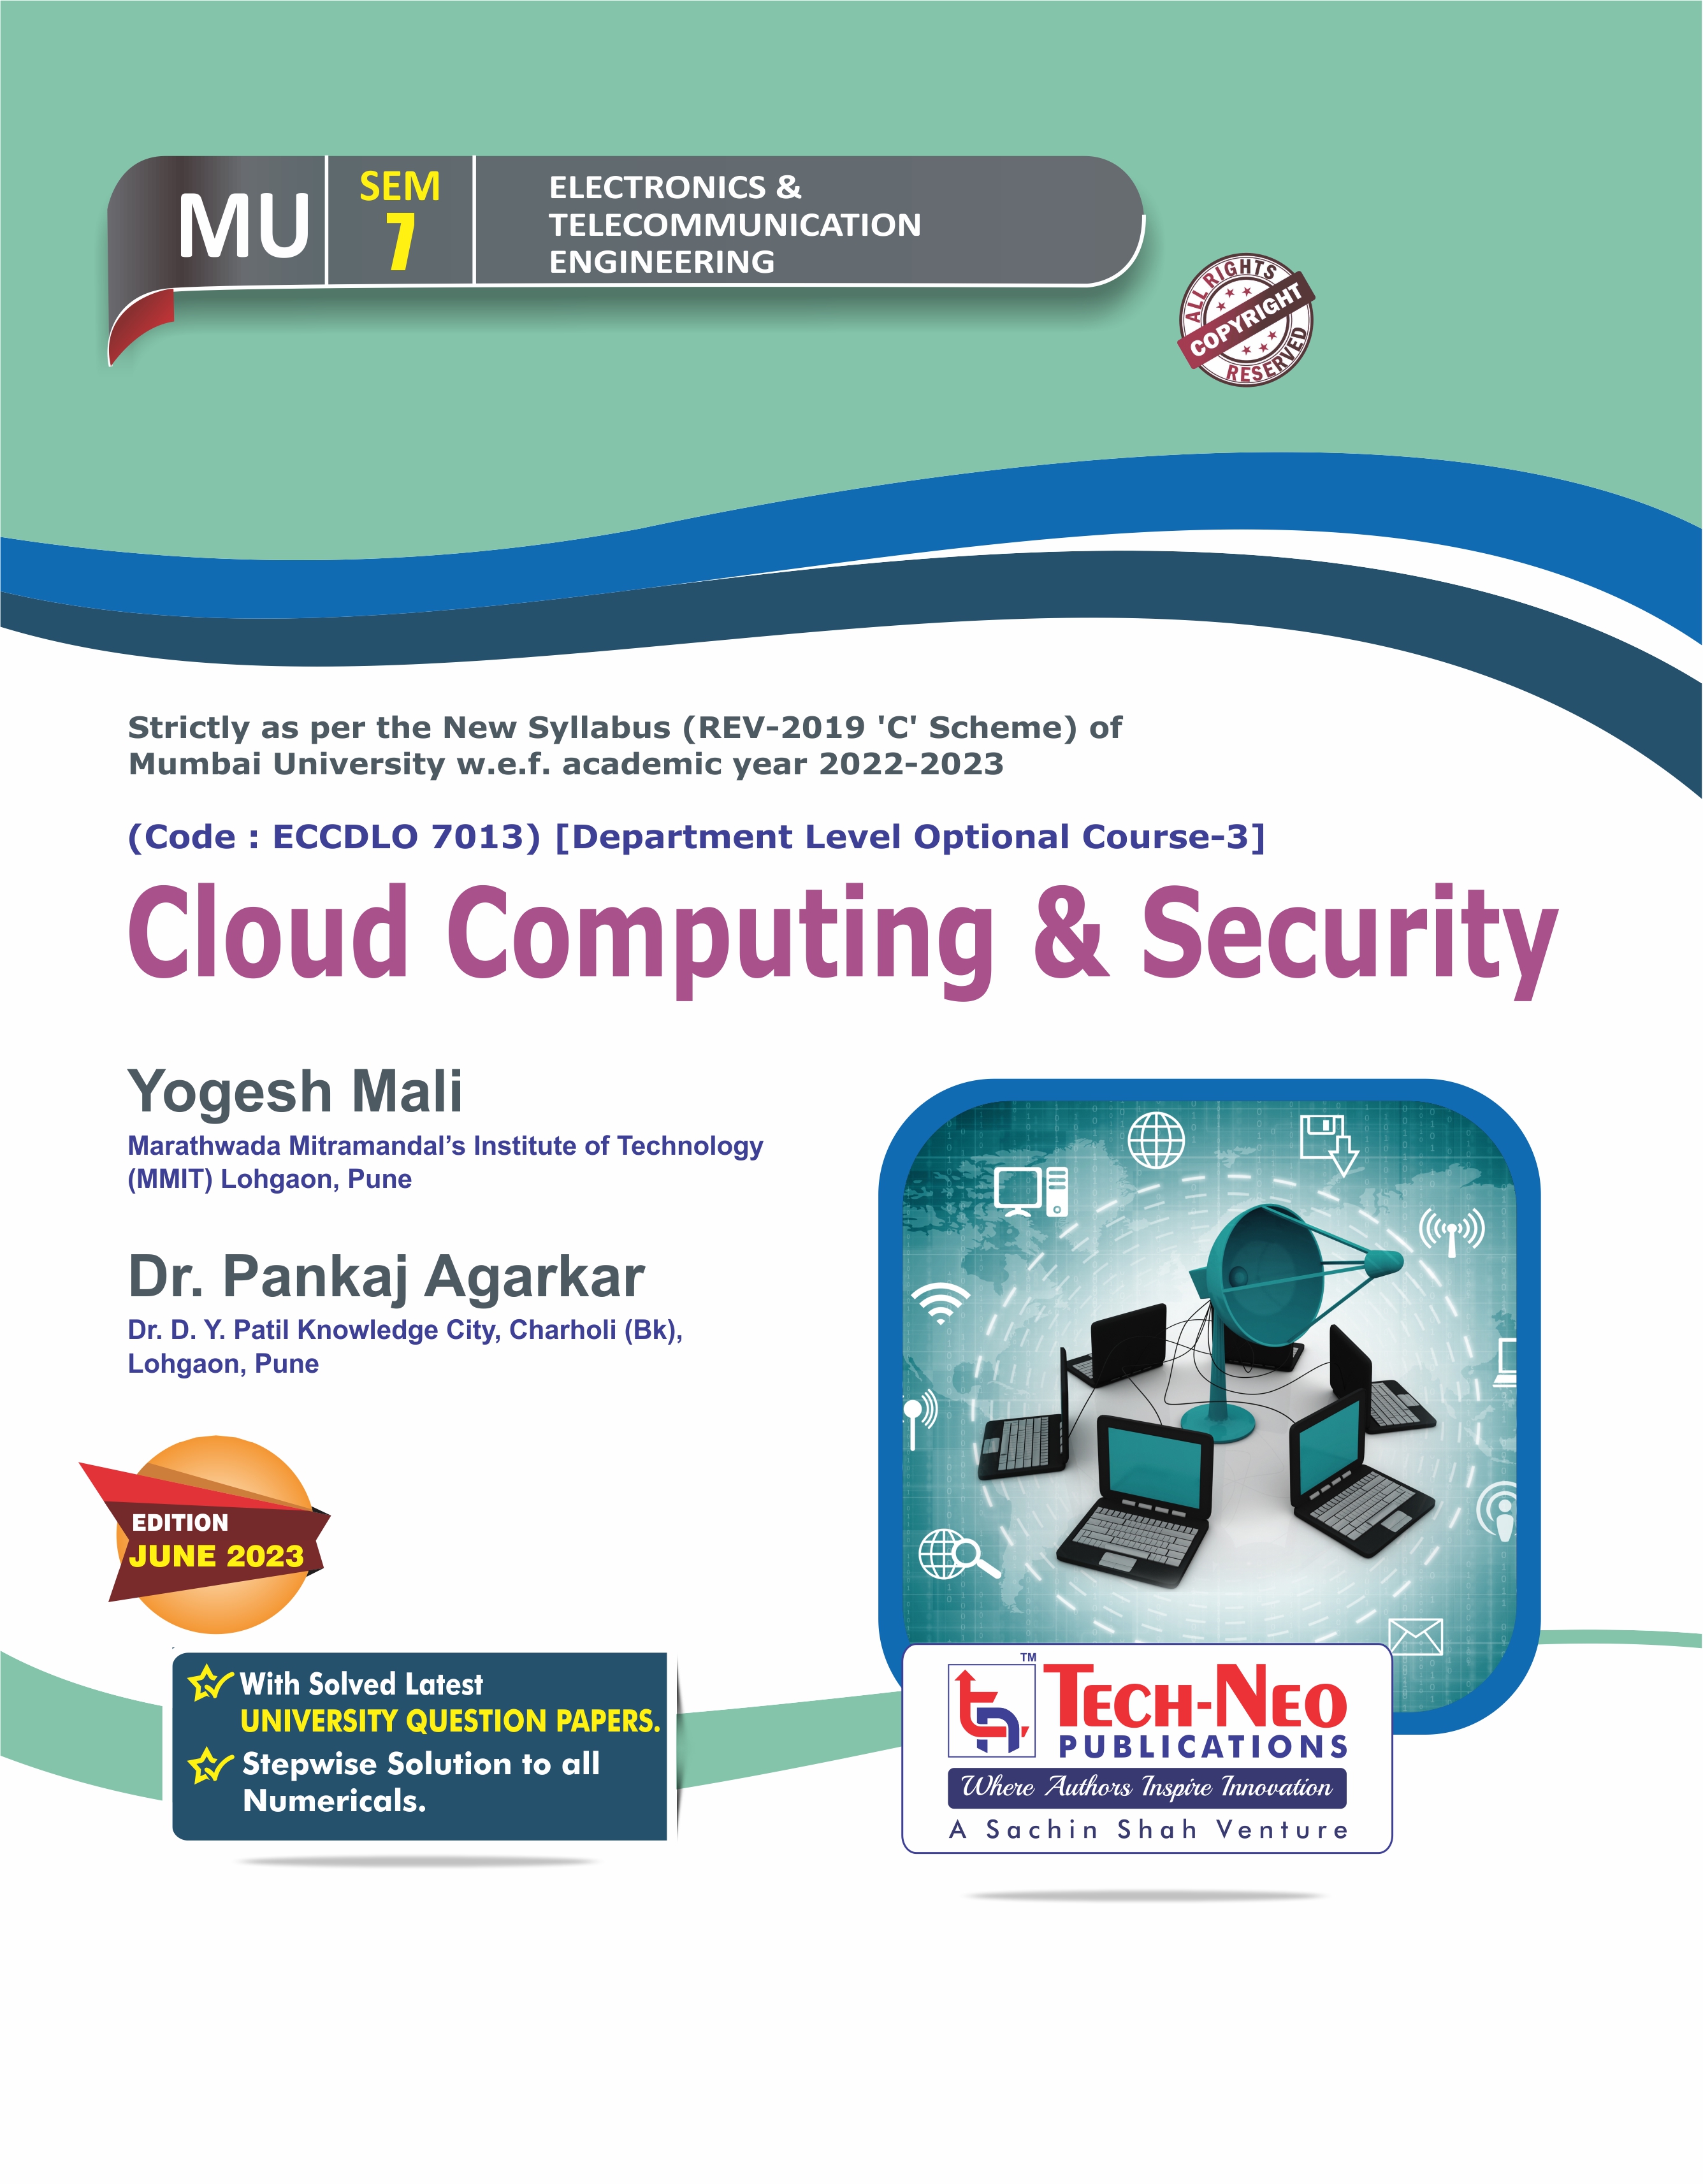 Cloud Computing and Security Sem 7 E&TC Engineering | Tech-Neo Publication | Mumbai University